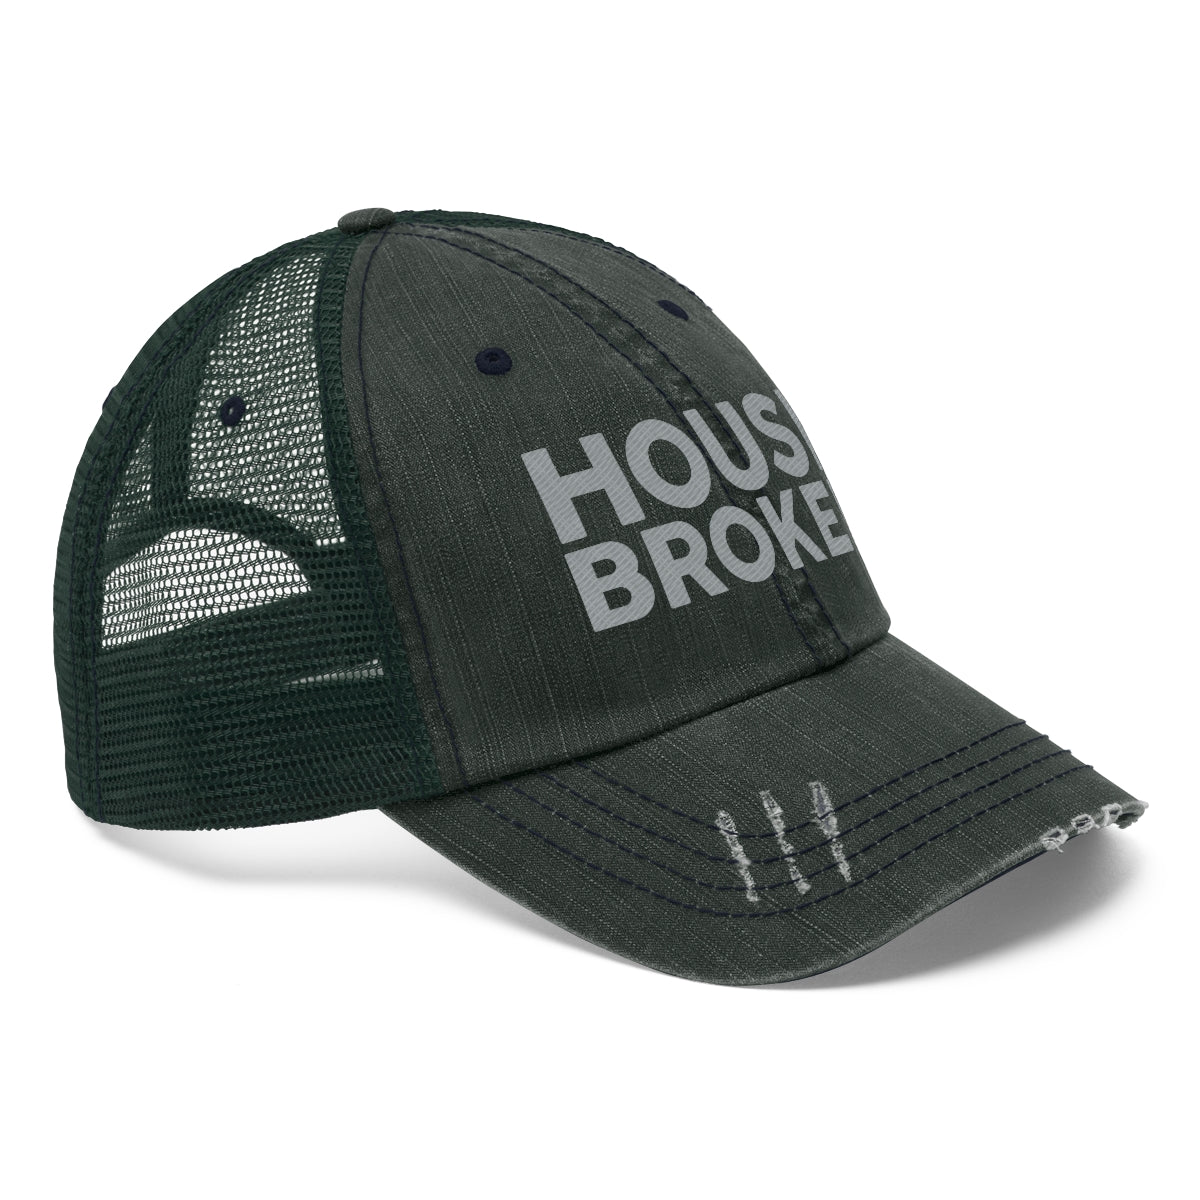 RT HOUSE BROKEN – Trucker Hat